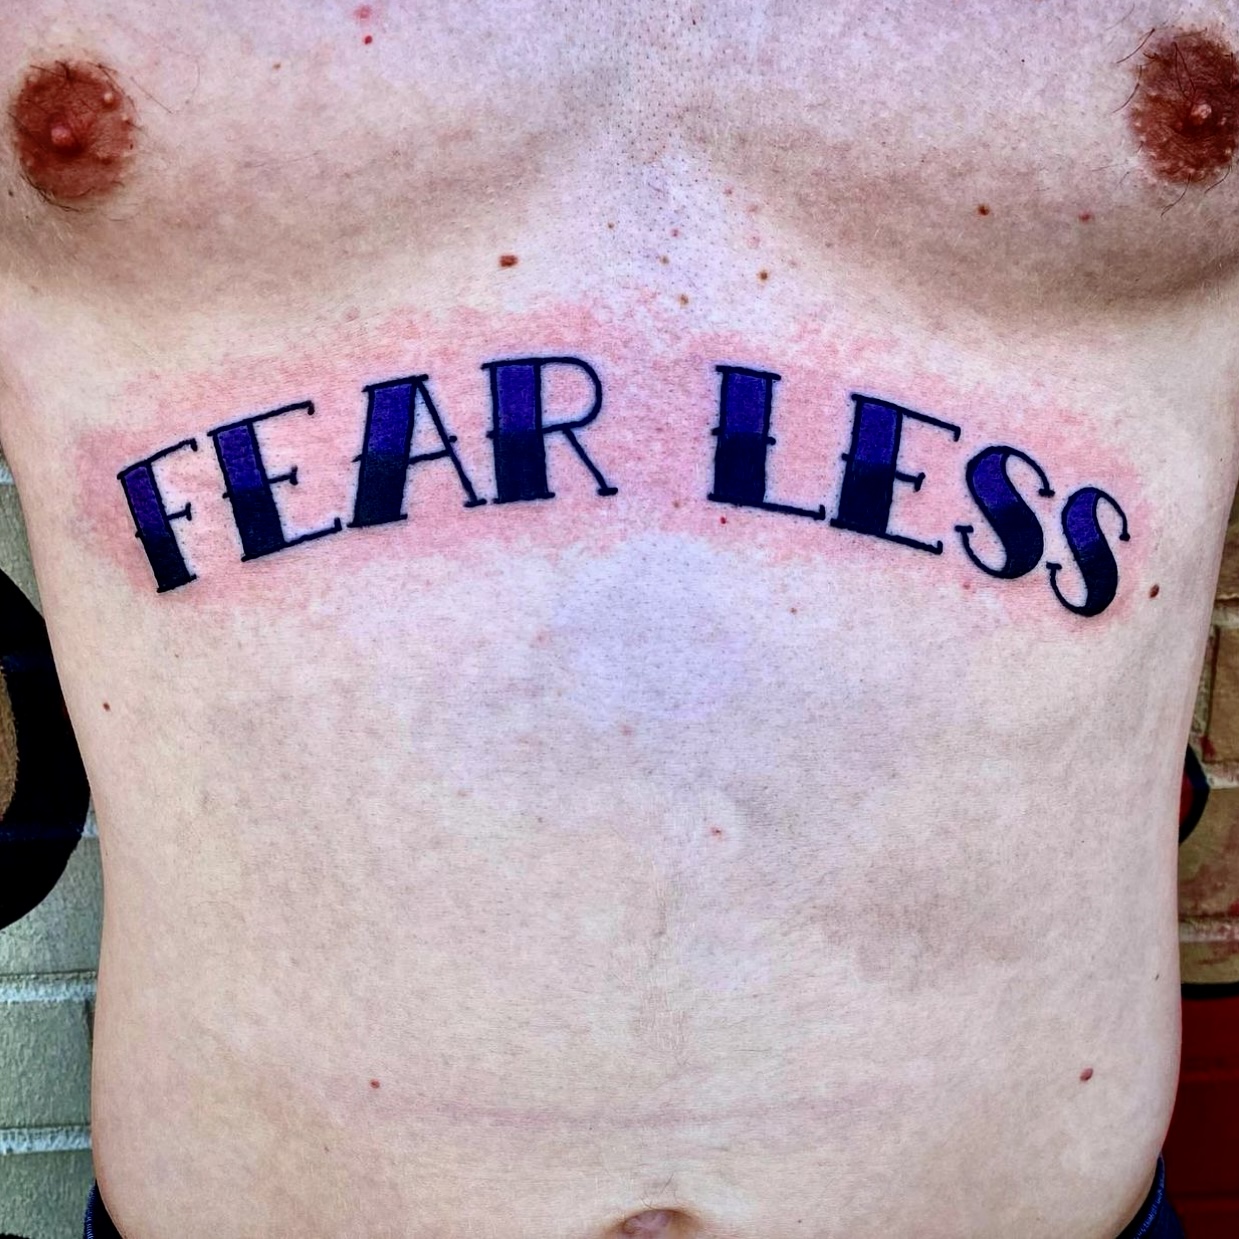 Tattoo of "fearless"